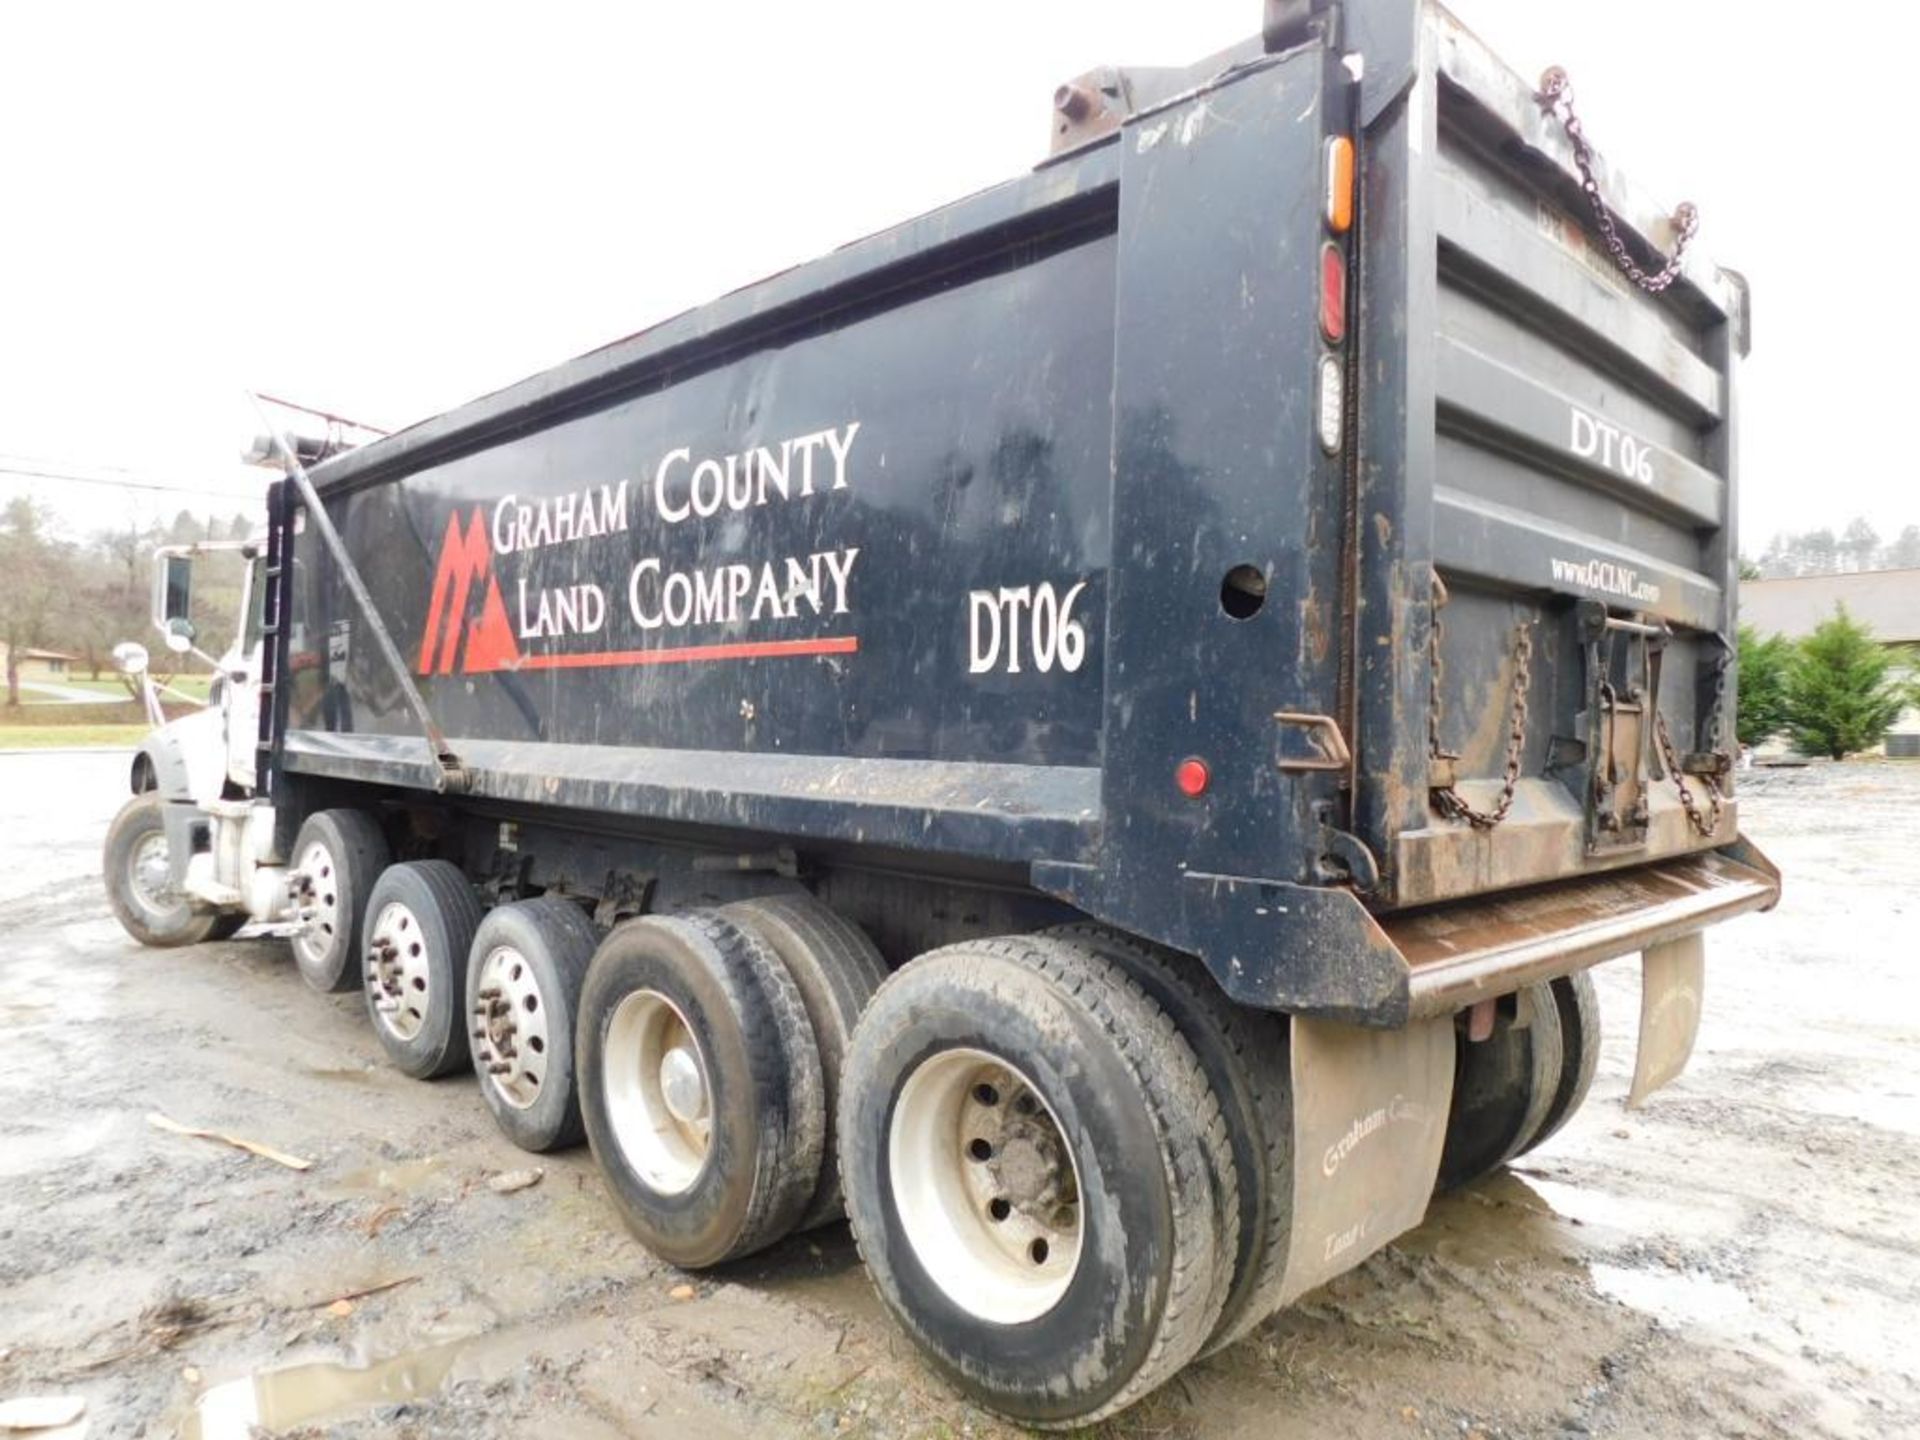 2017 Mack GV713 Quint-Axle Dump Truck, VIN 1M2AX07C7HMO33546, 289,436 Miles Indicated, DT06 - Image 6 of 9